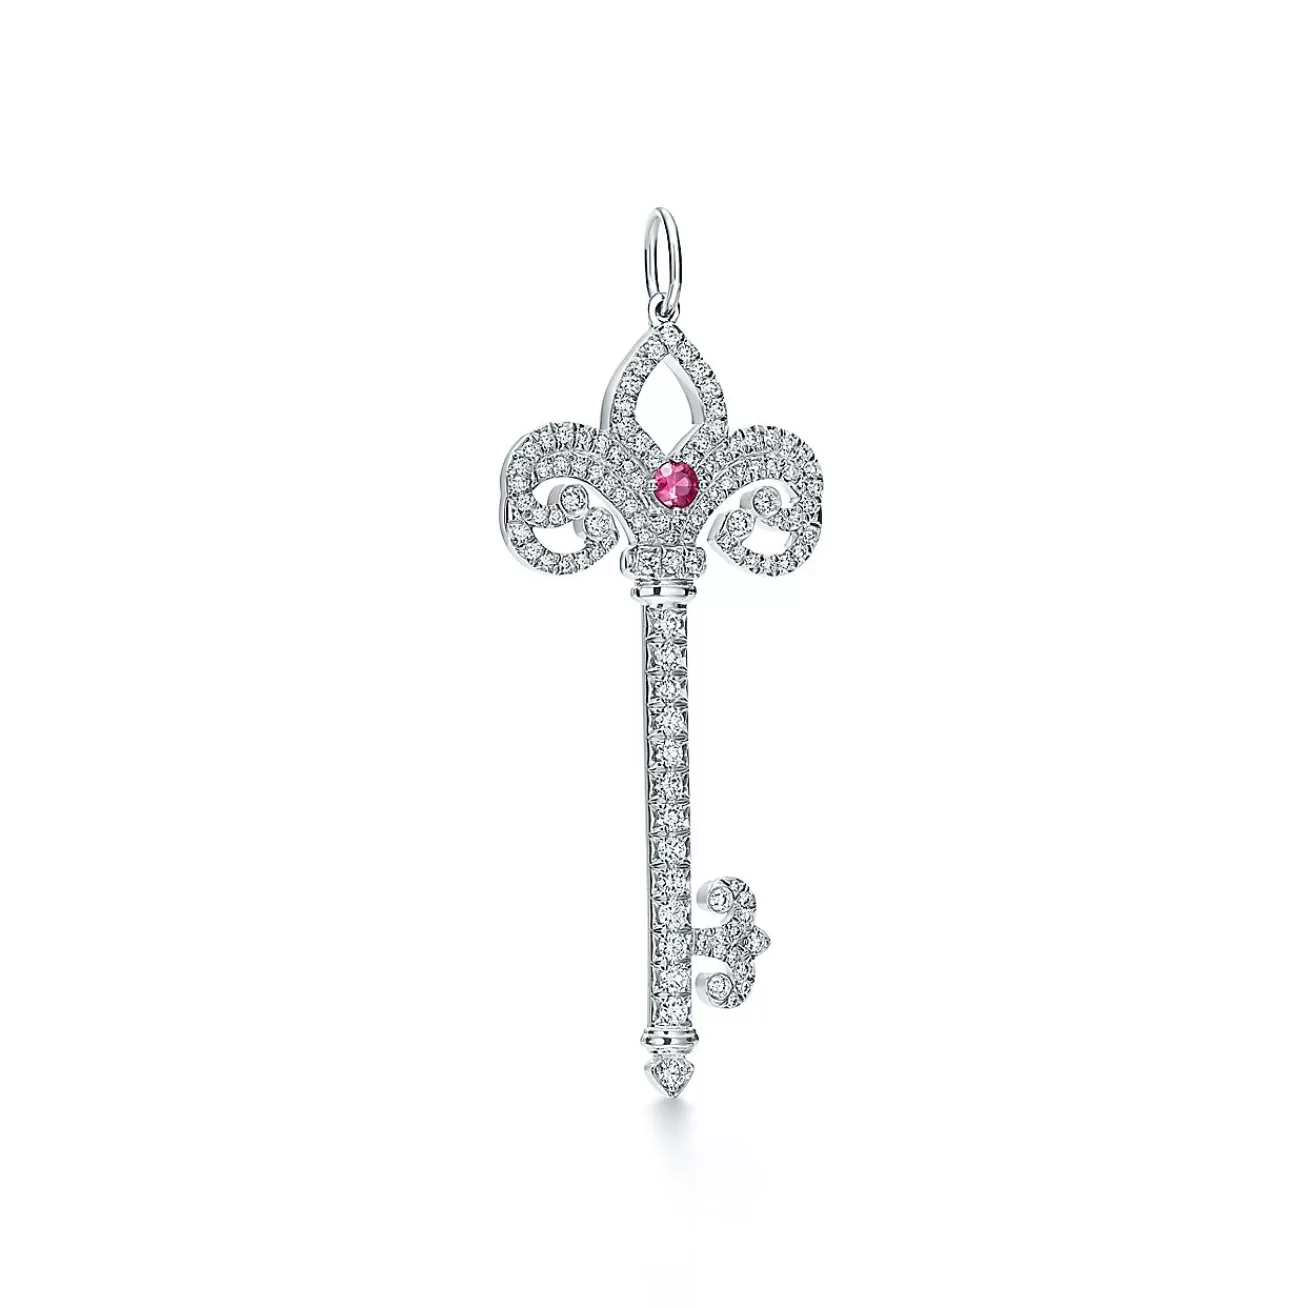 Tiffany & Co. Tiffany Keys Tiffany Fleur de Lis key pendant in platinum with gemstones. | ^ Platinum Jewelry